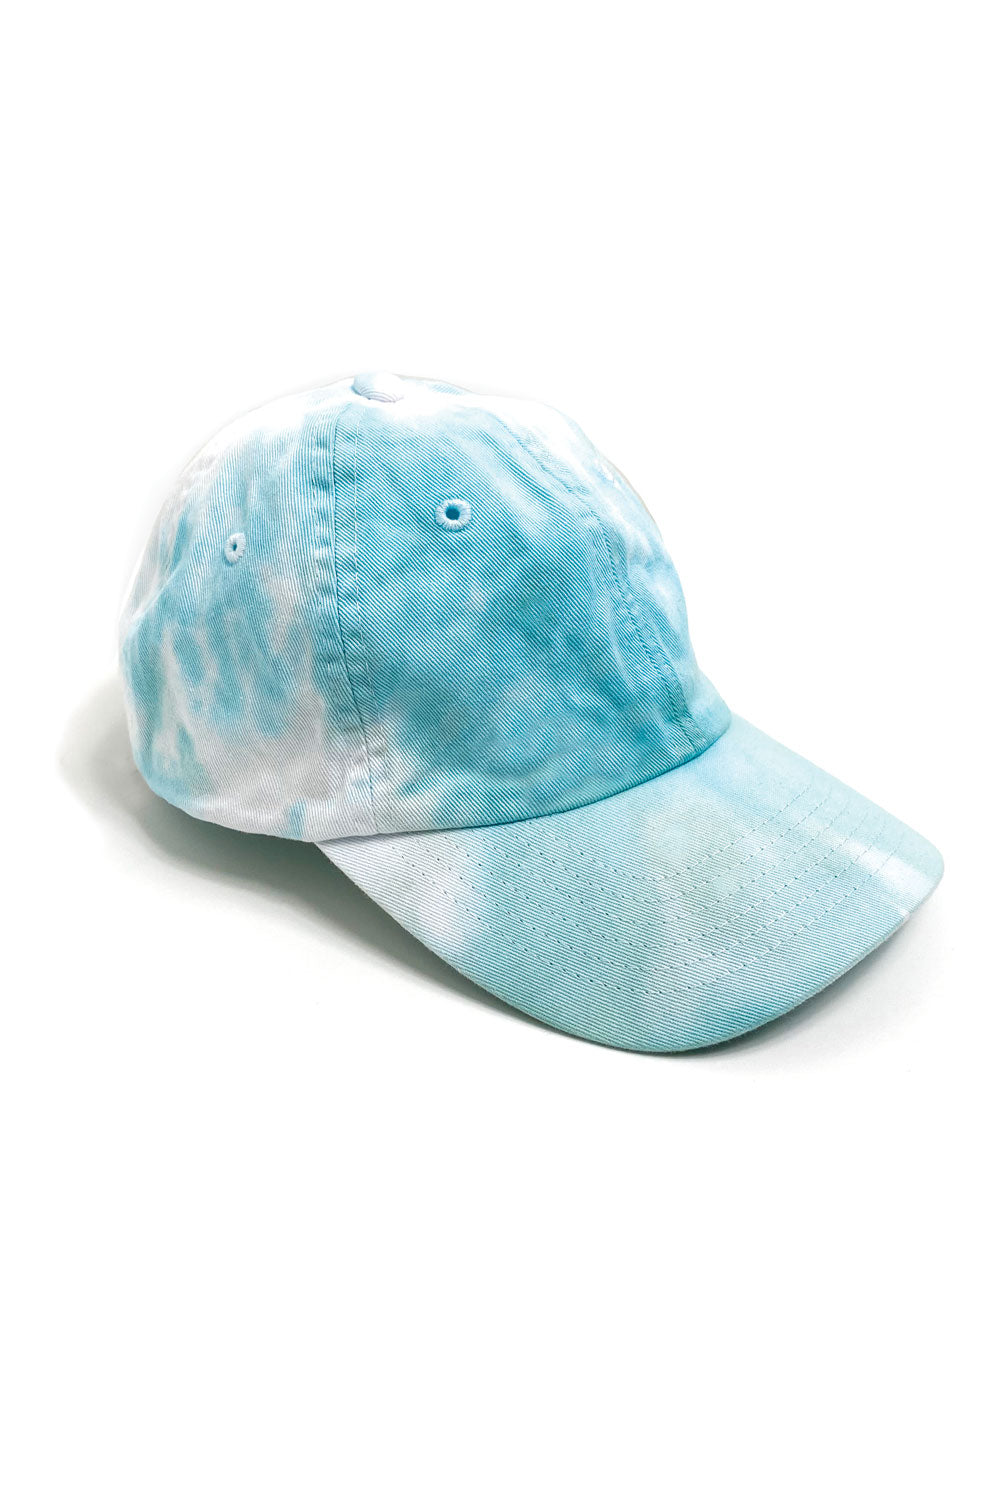 Teal Tie-Dye Baseball cap